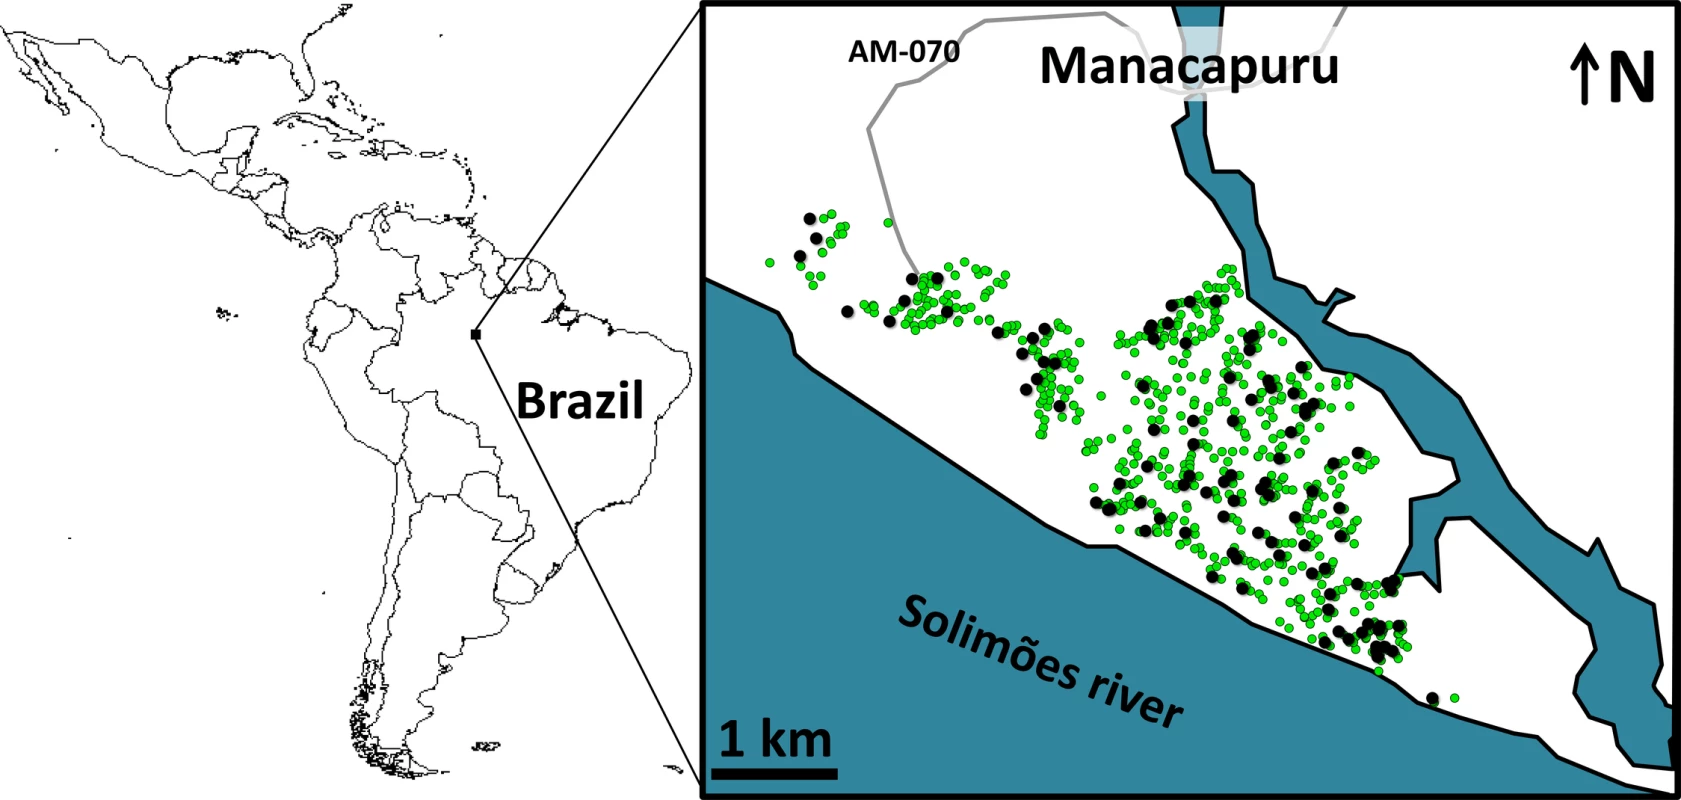 Study site: the city of Manacapuru, state of Amazonas, Brazil.